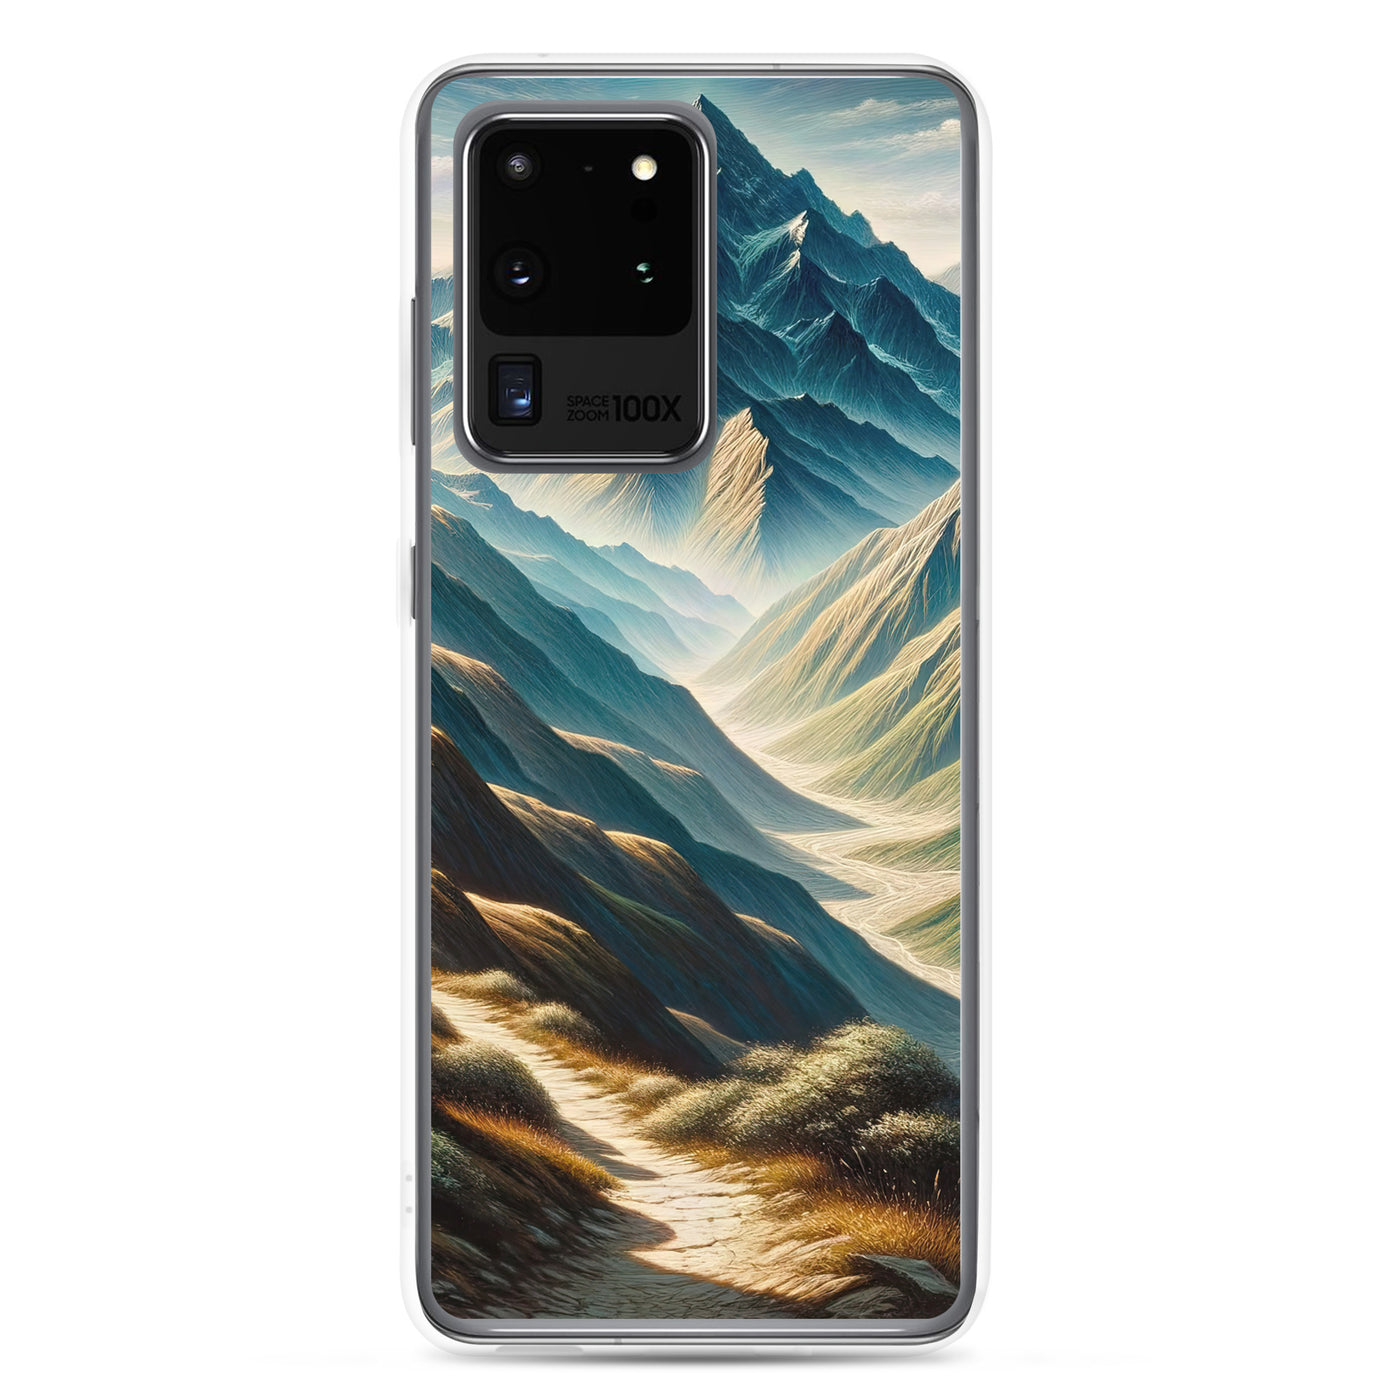 Berglandschaft: Acrylgemälde mit hervorgehobenem Pfad - Samsung Schutzhülle (durchsichtig) berge xxx yyy zzz Samsung Galaxy S20 Ultra